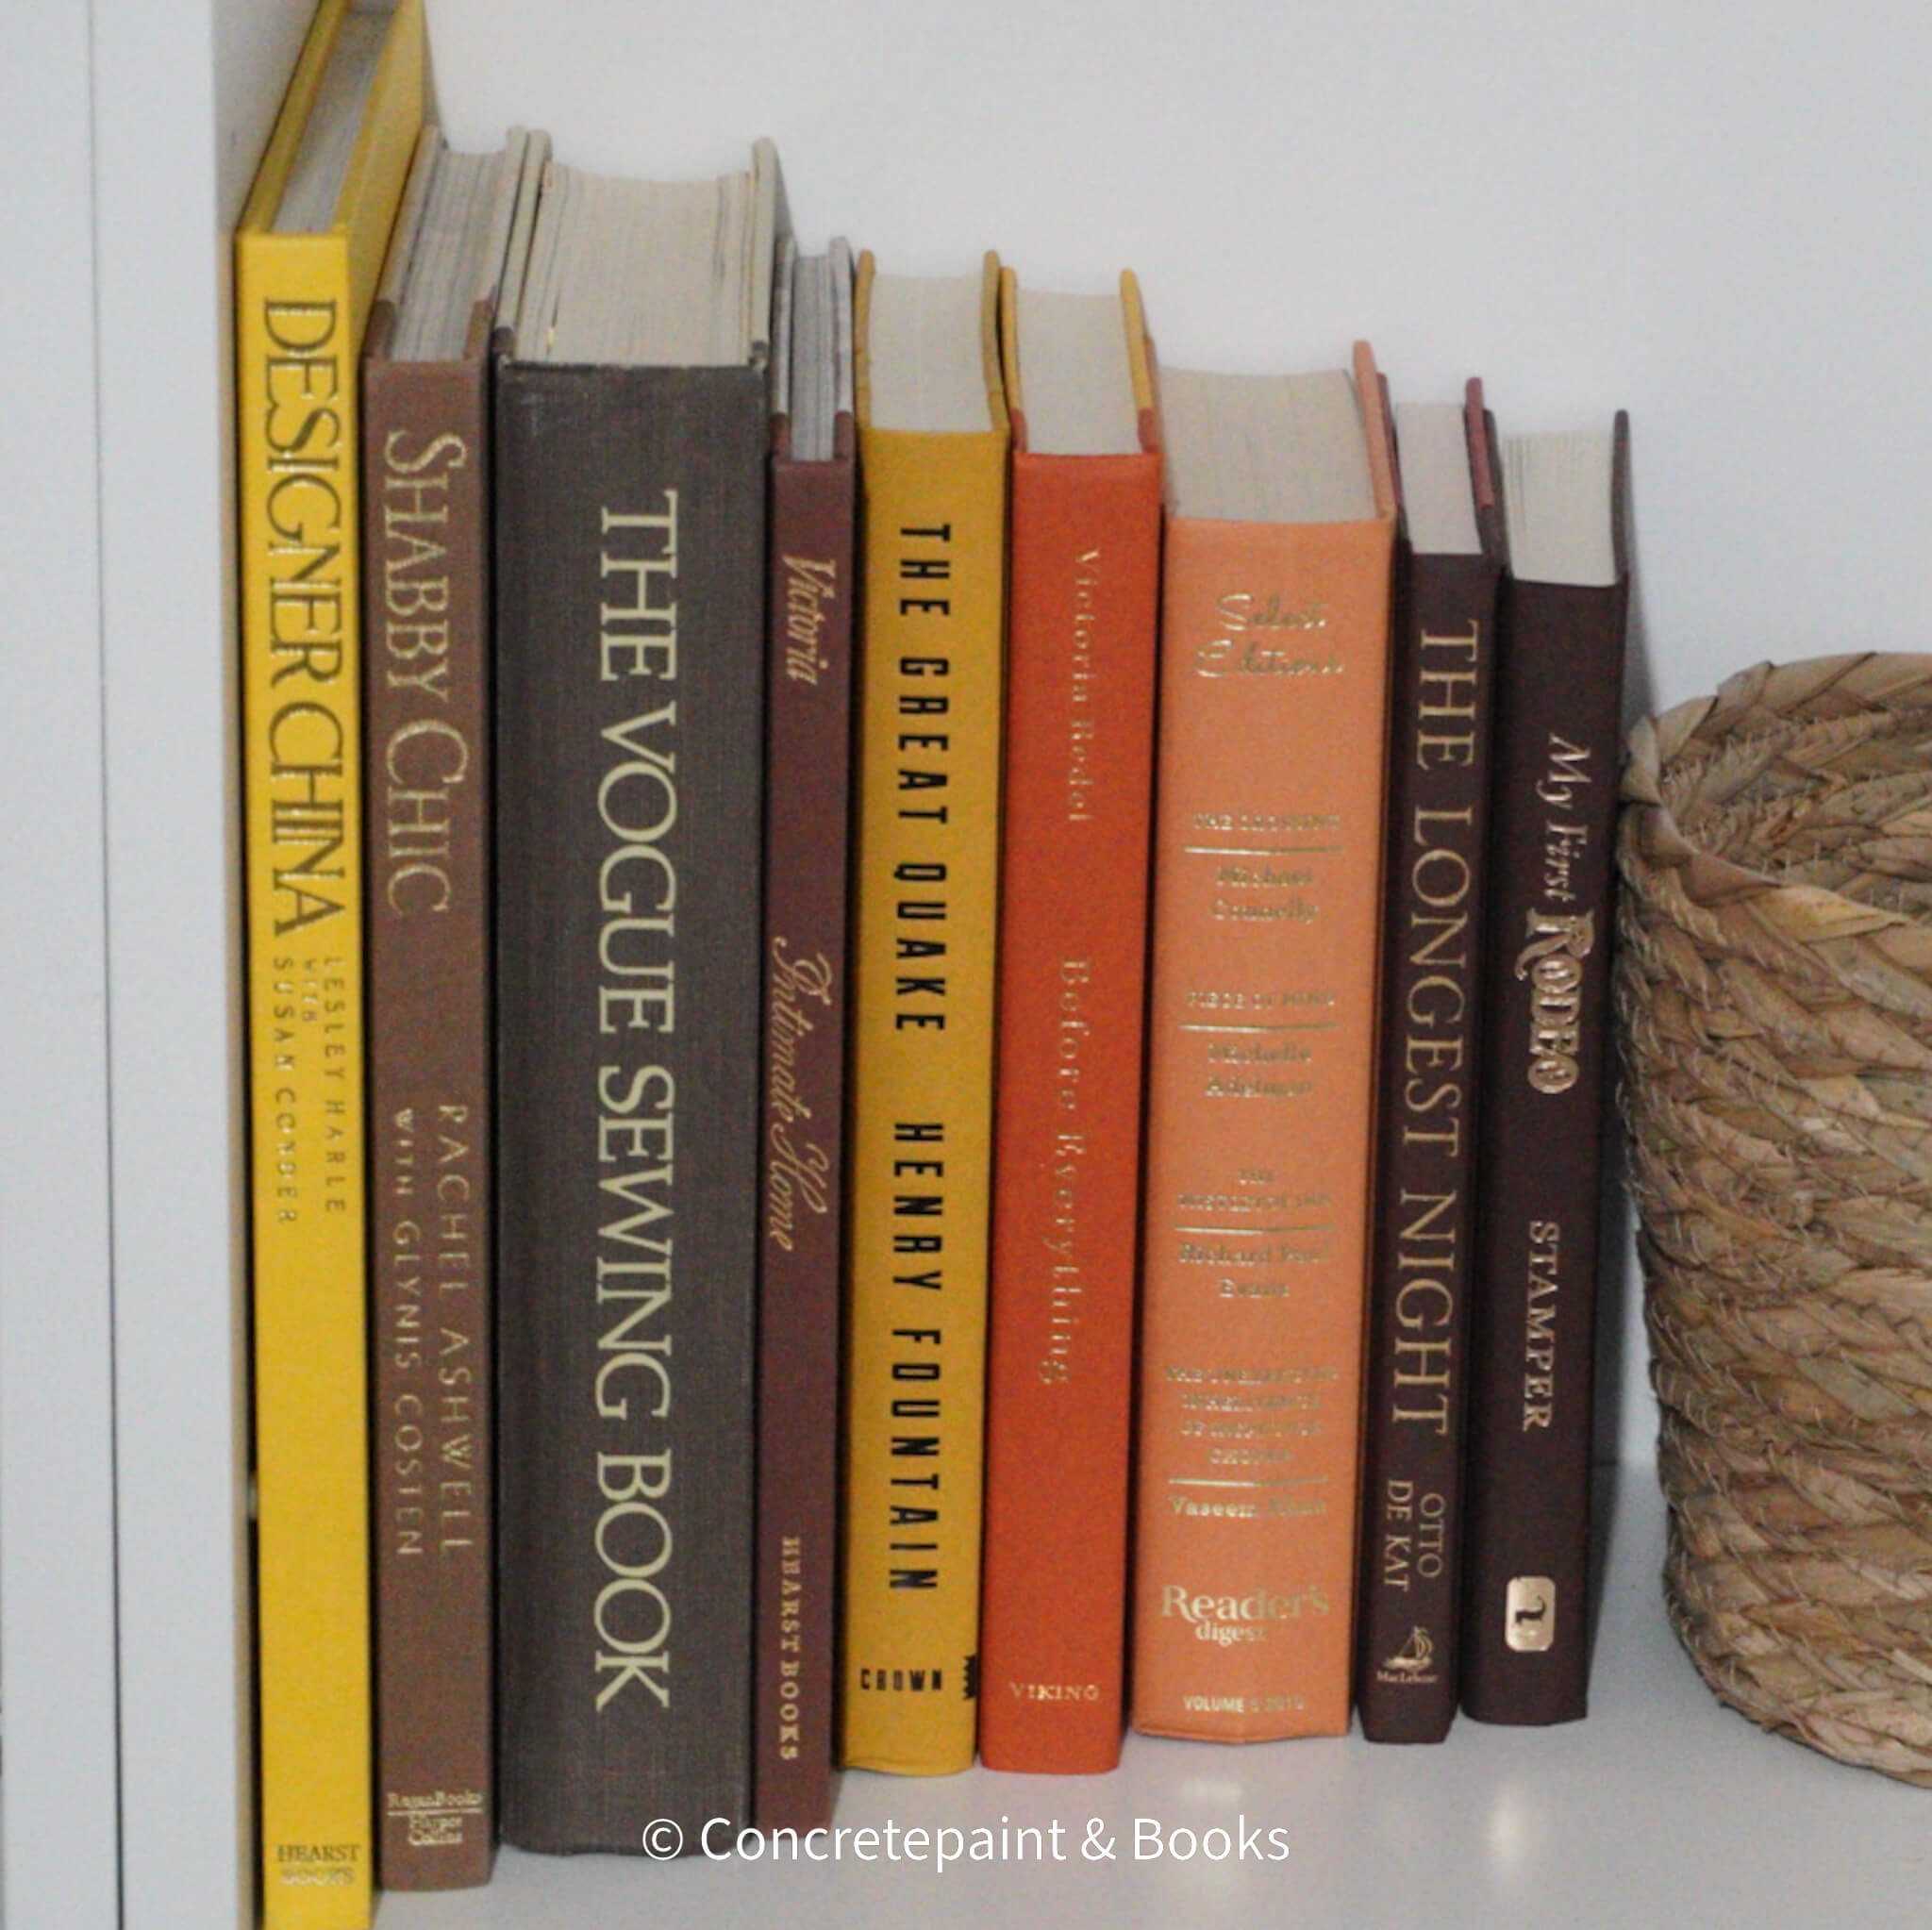 Set of decorative large books for display. Brown, yellow, and orange vintage books on bookshelf. 